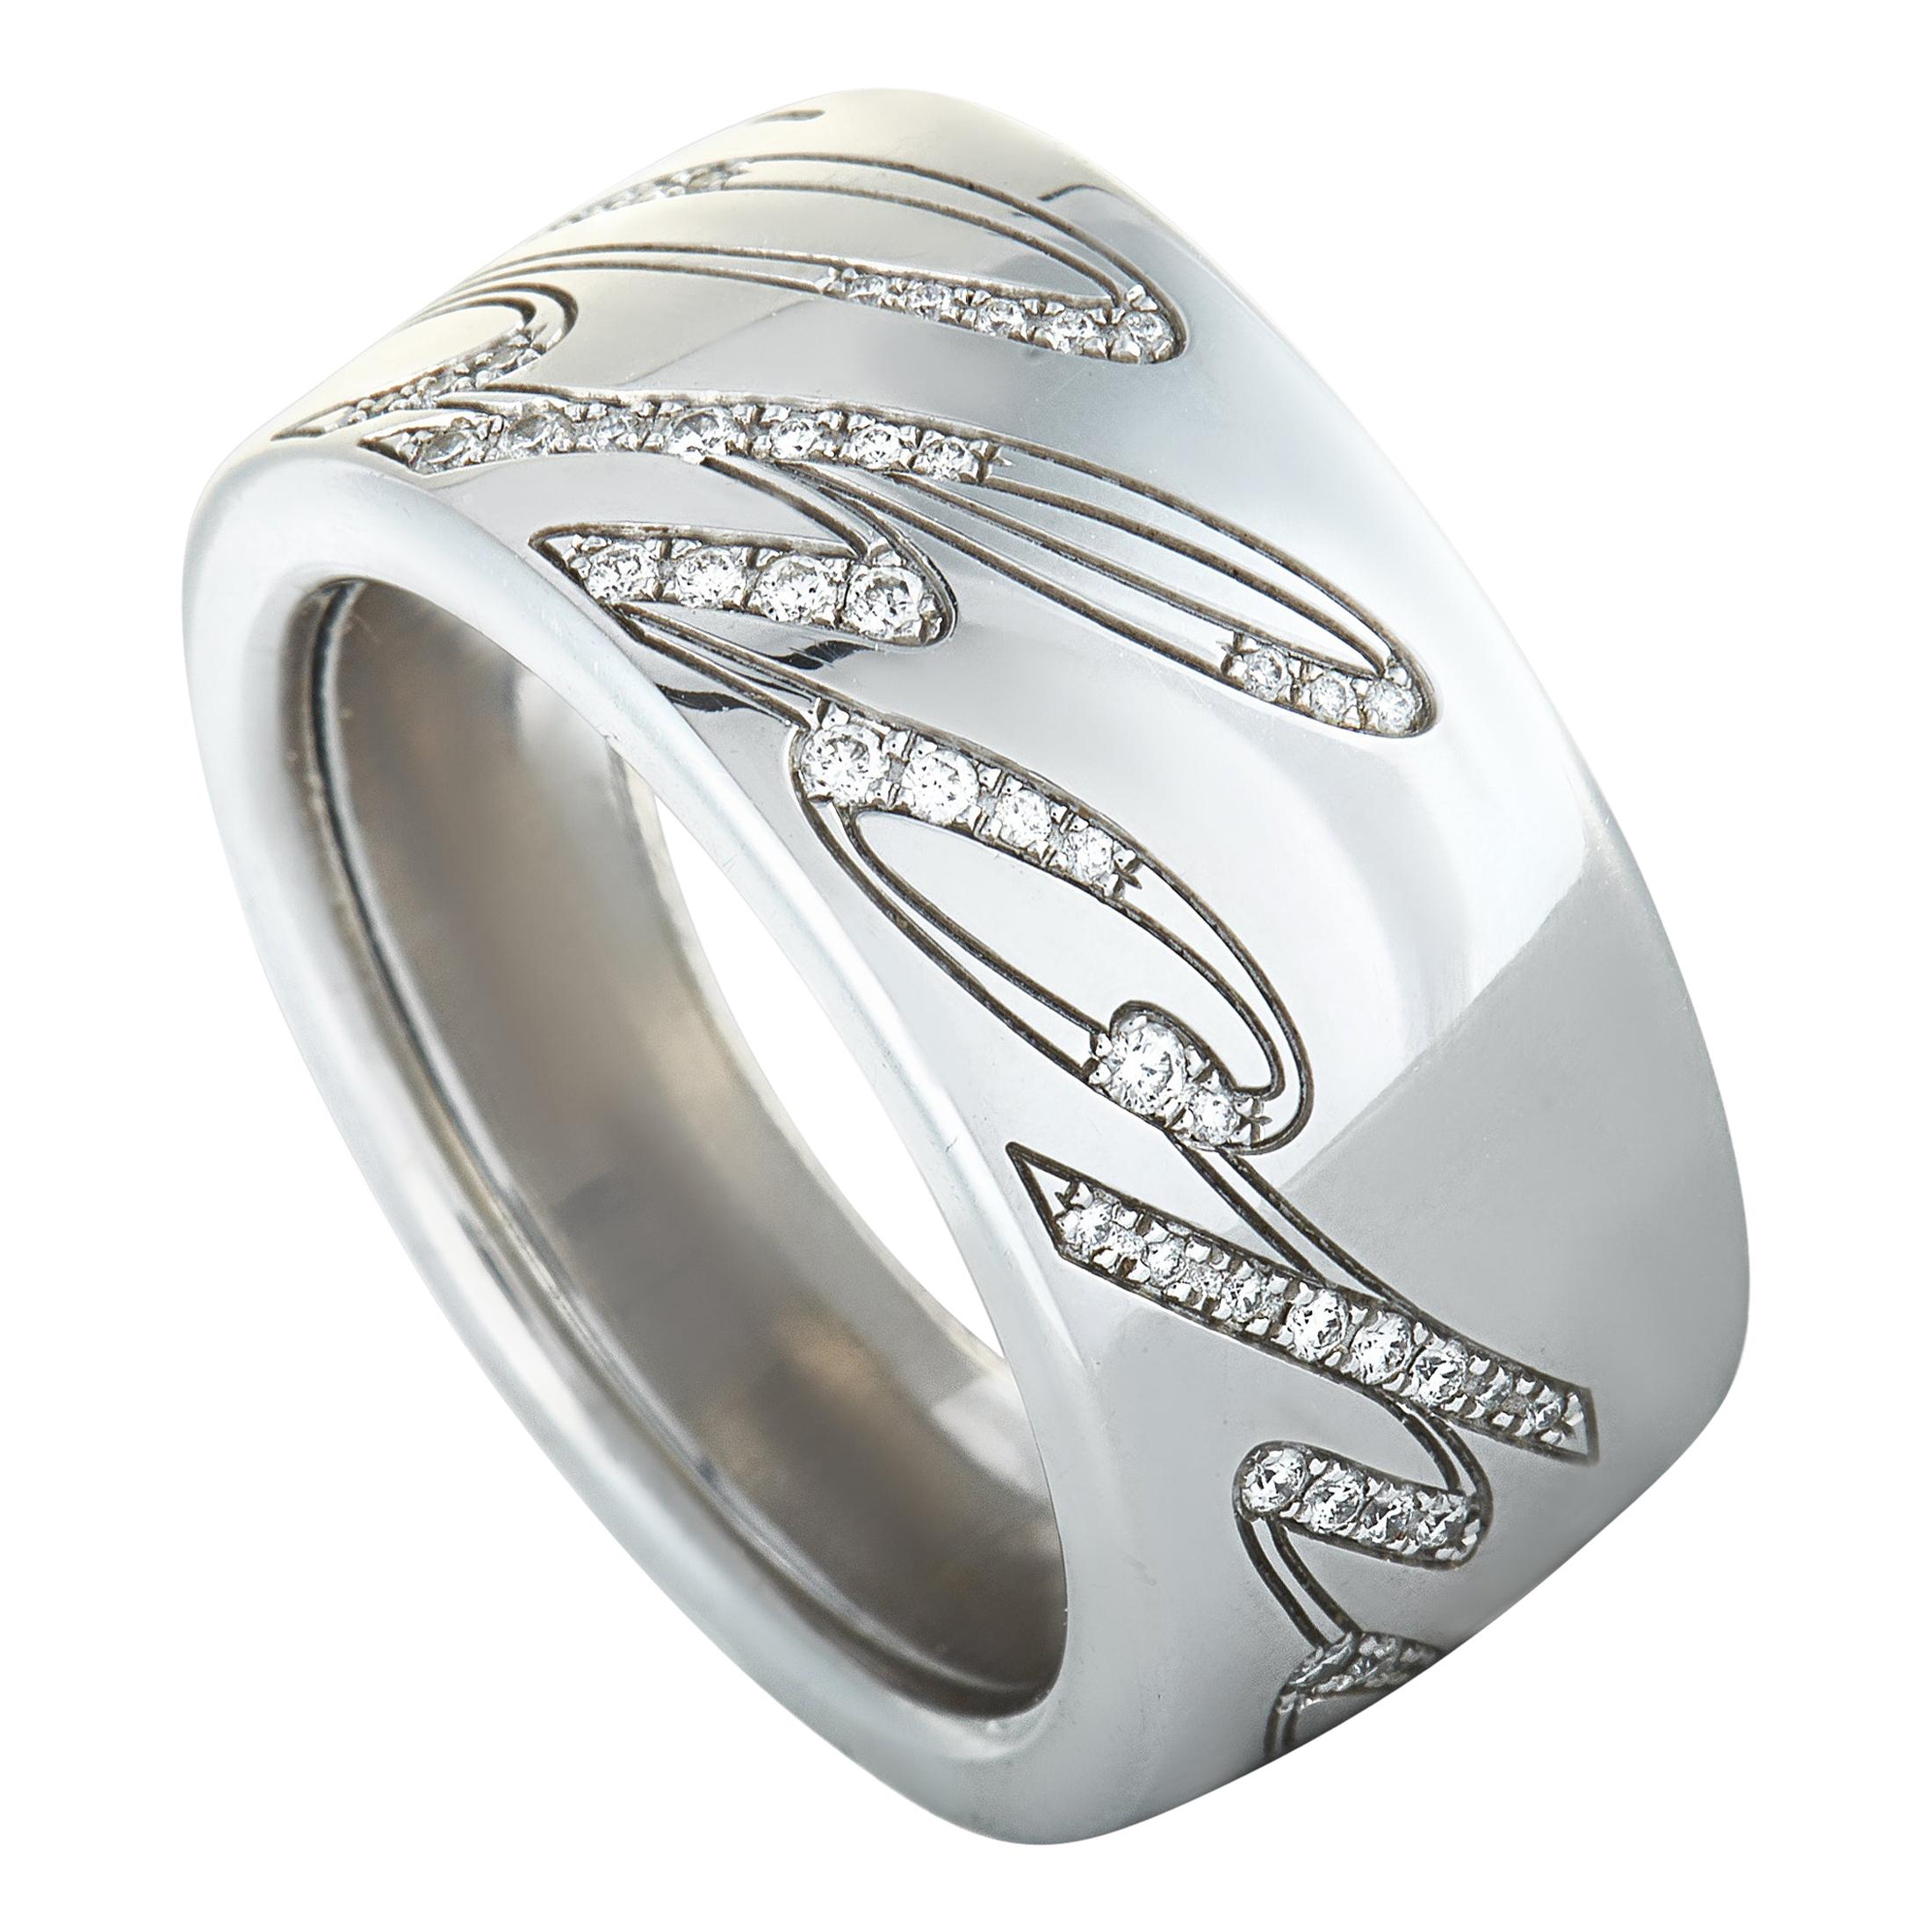 Chopard Chopardissimo 18 Karat White Gold Diamond Signature Band Ring